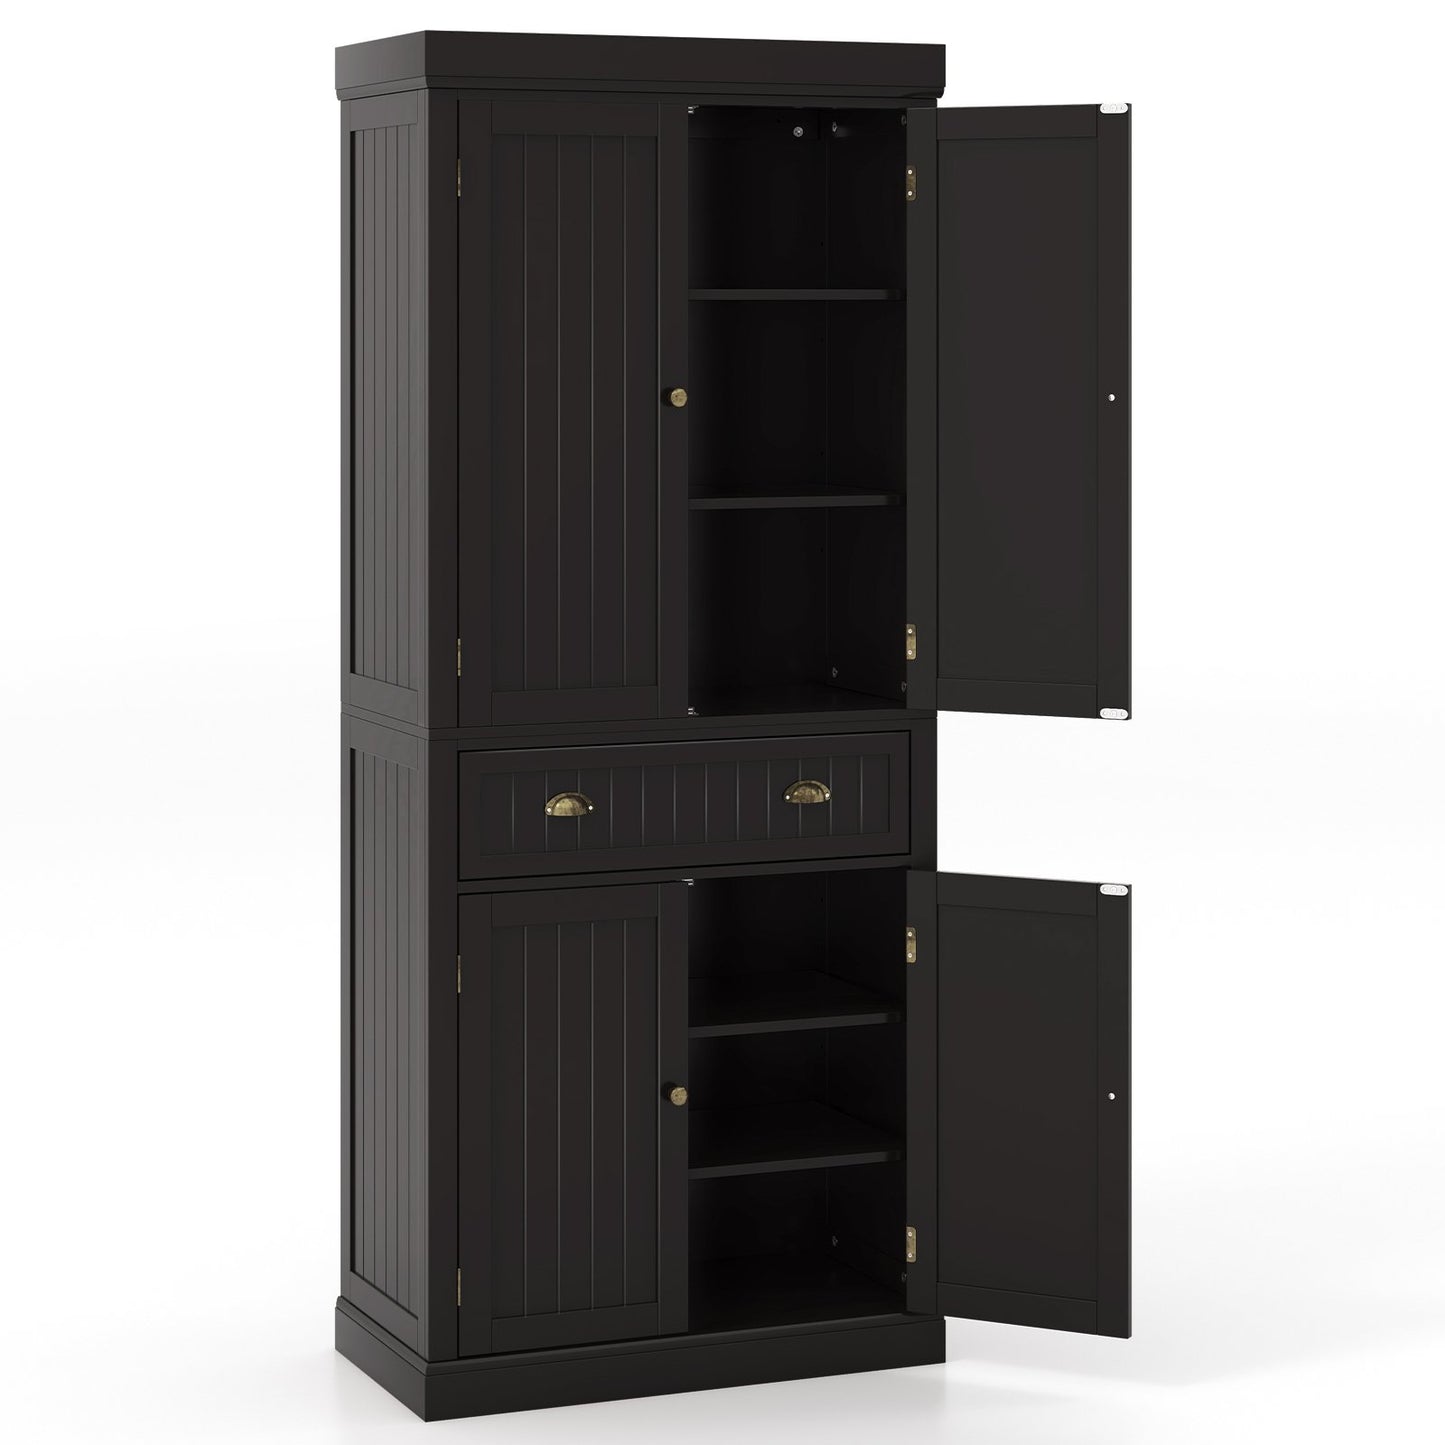 Cupboard Freestanding Kitchen Cabinet w/ Adjustable Shelves, Dark Brown - Gallery Canada